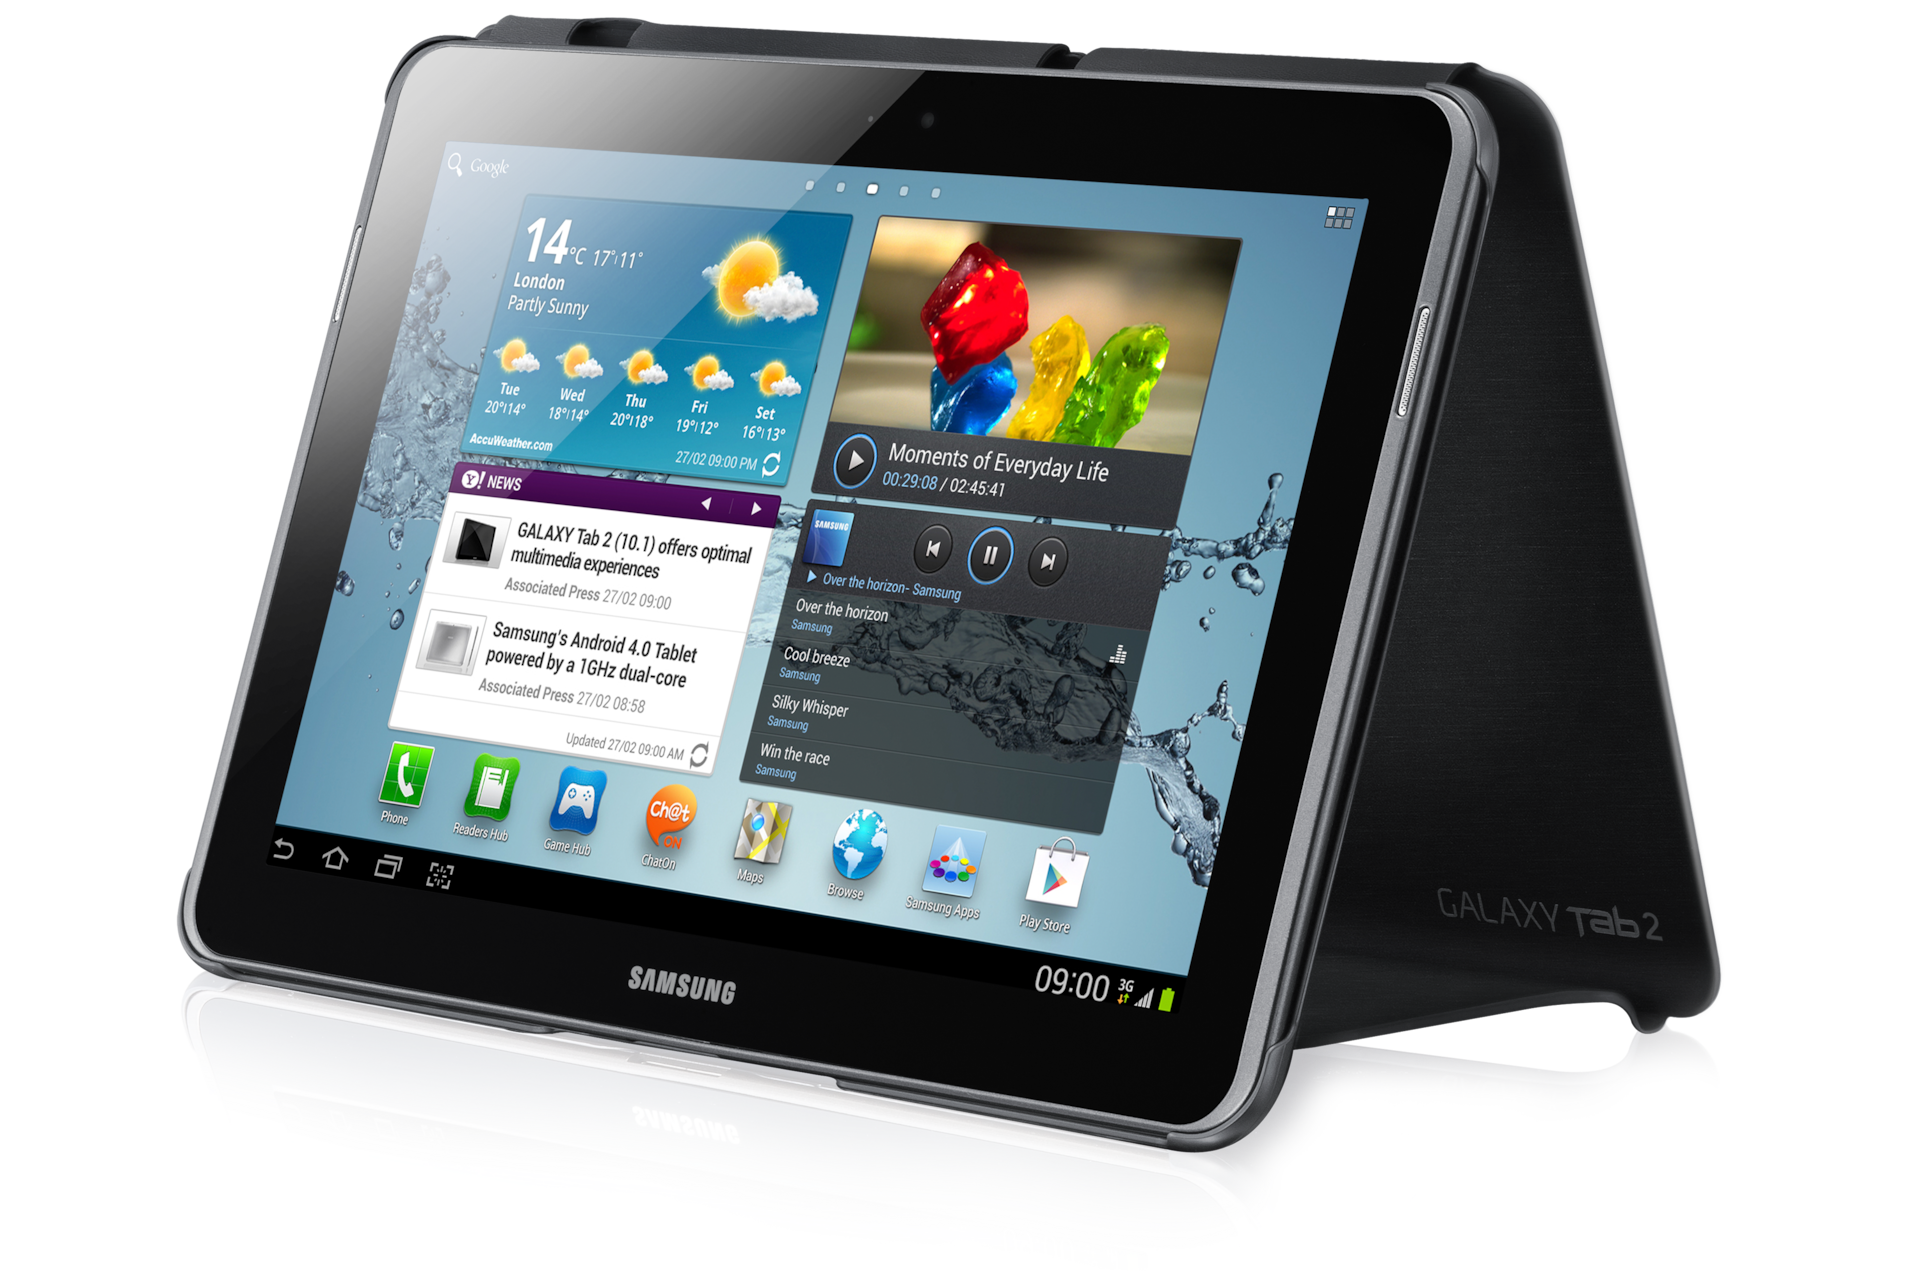 Samsung Galaxy Tab 2 10.1 Android Tablet User Manual